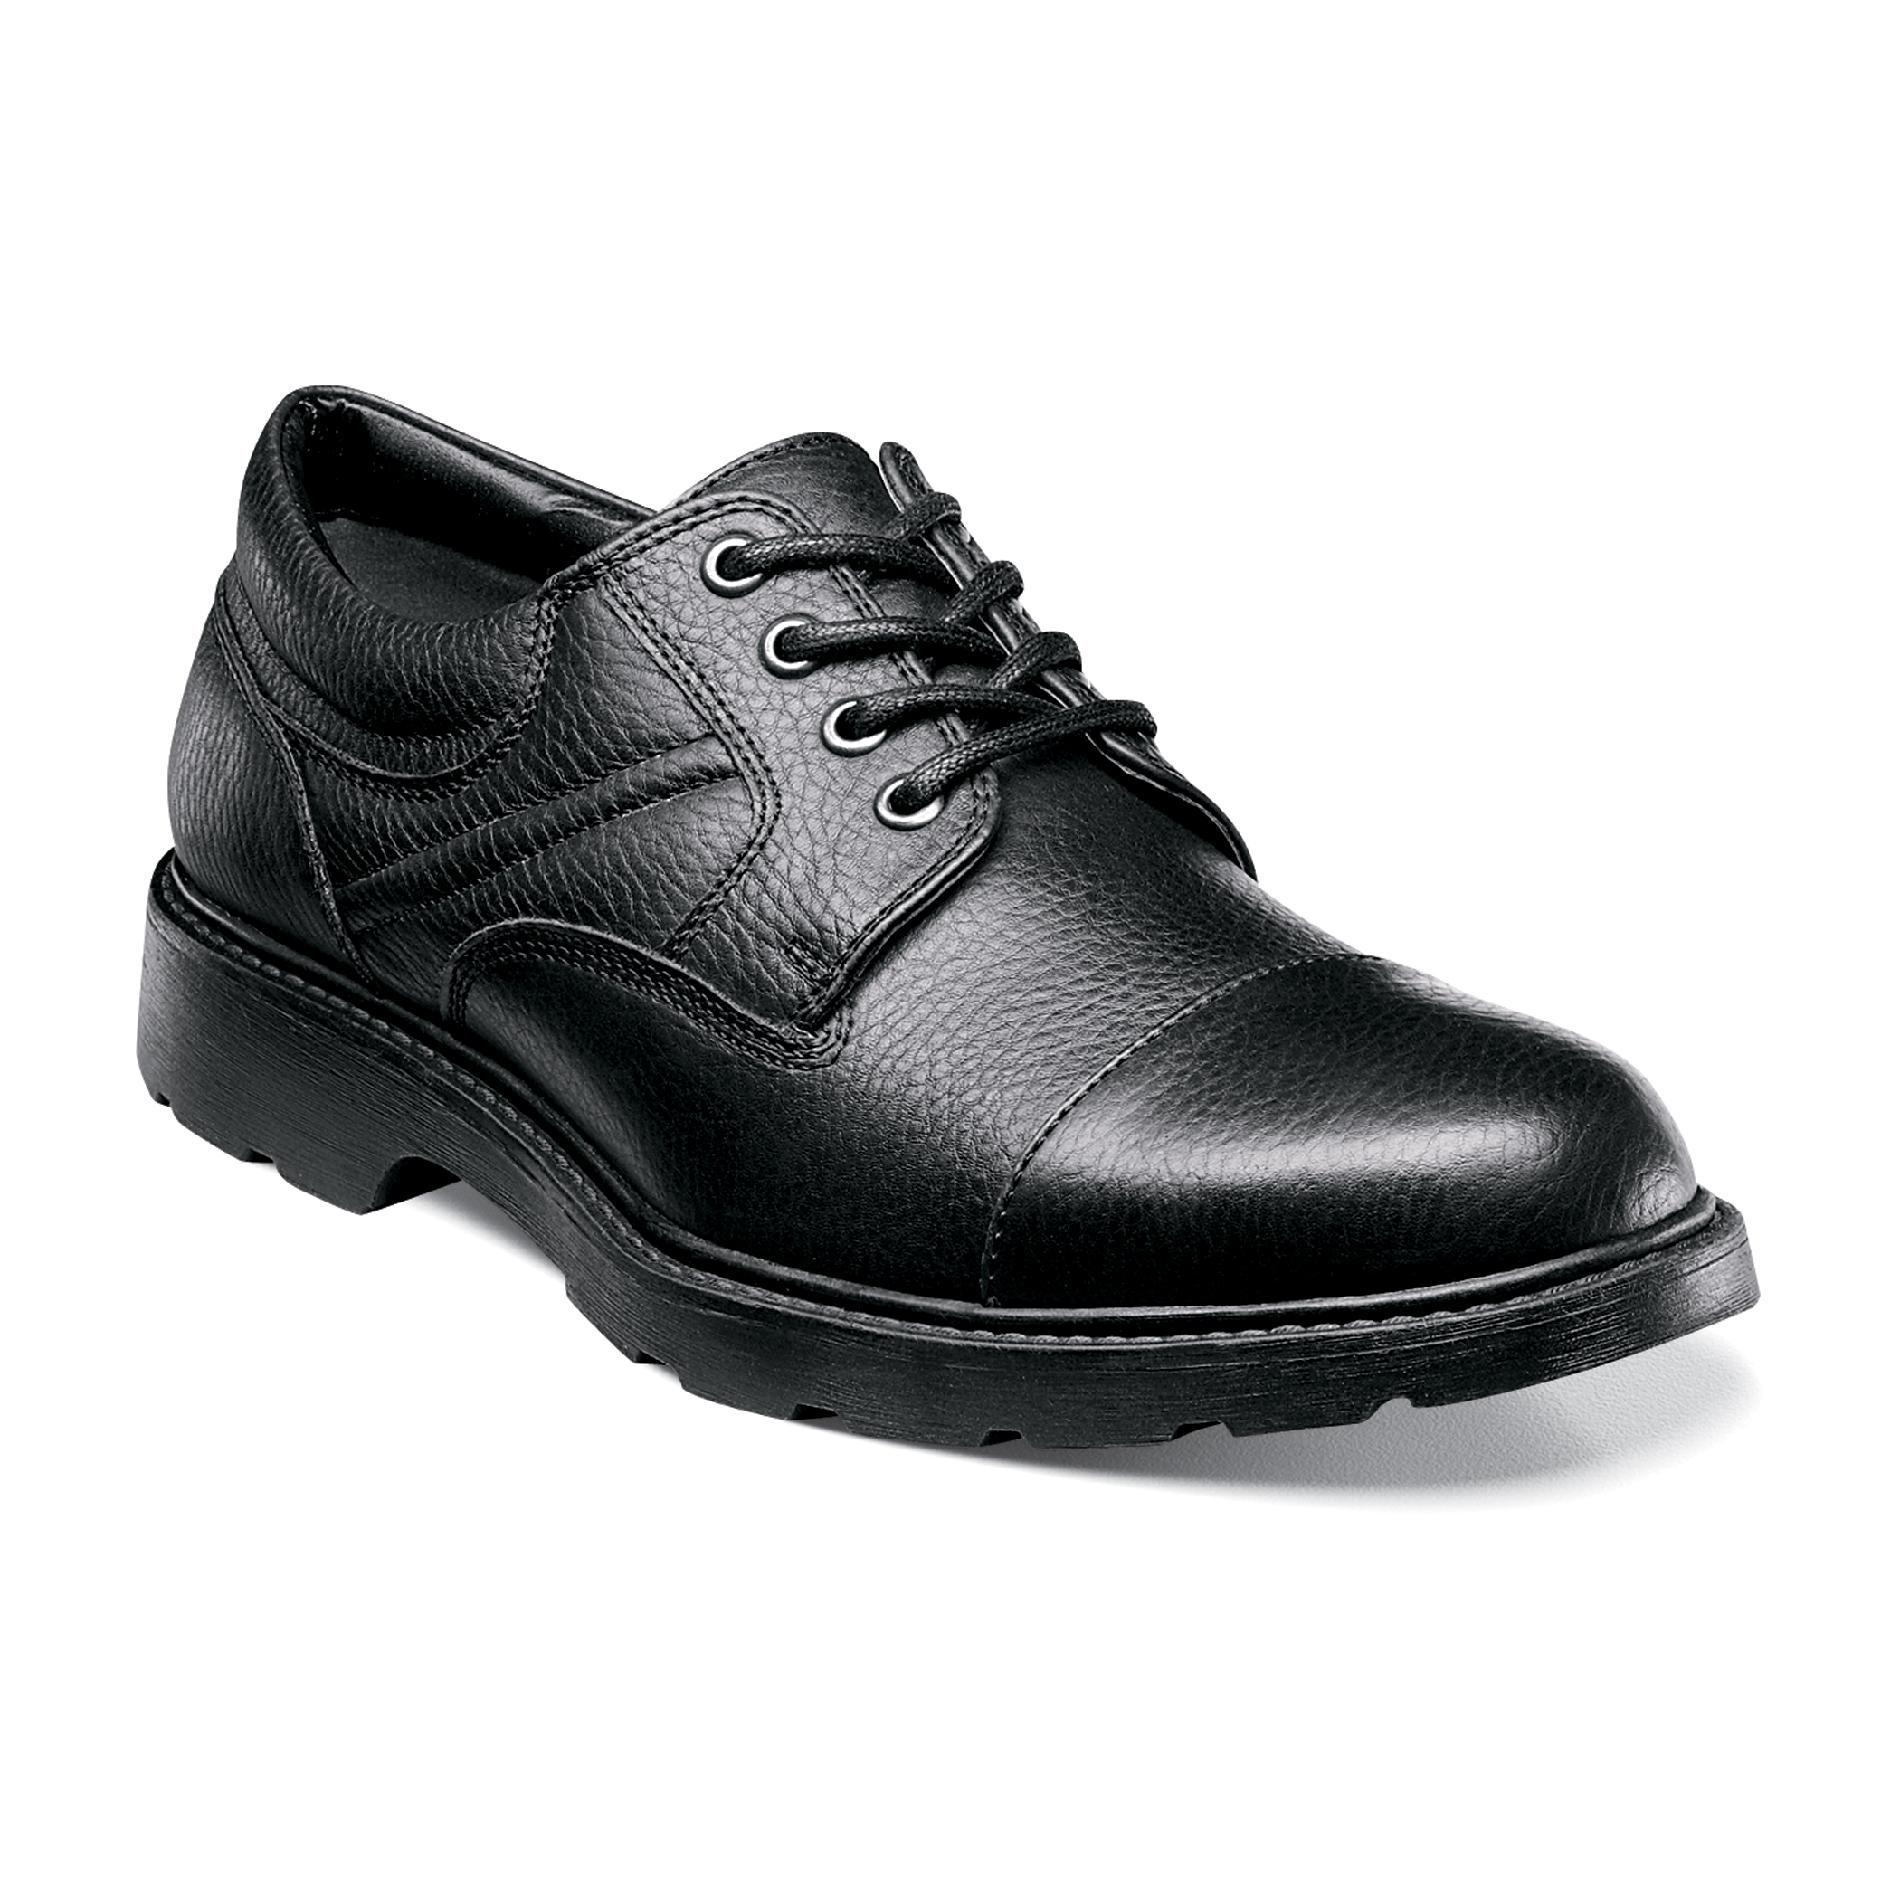 Nunn Bush Men's Casual Shoe Glenwood Wide Avail - Black